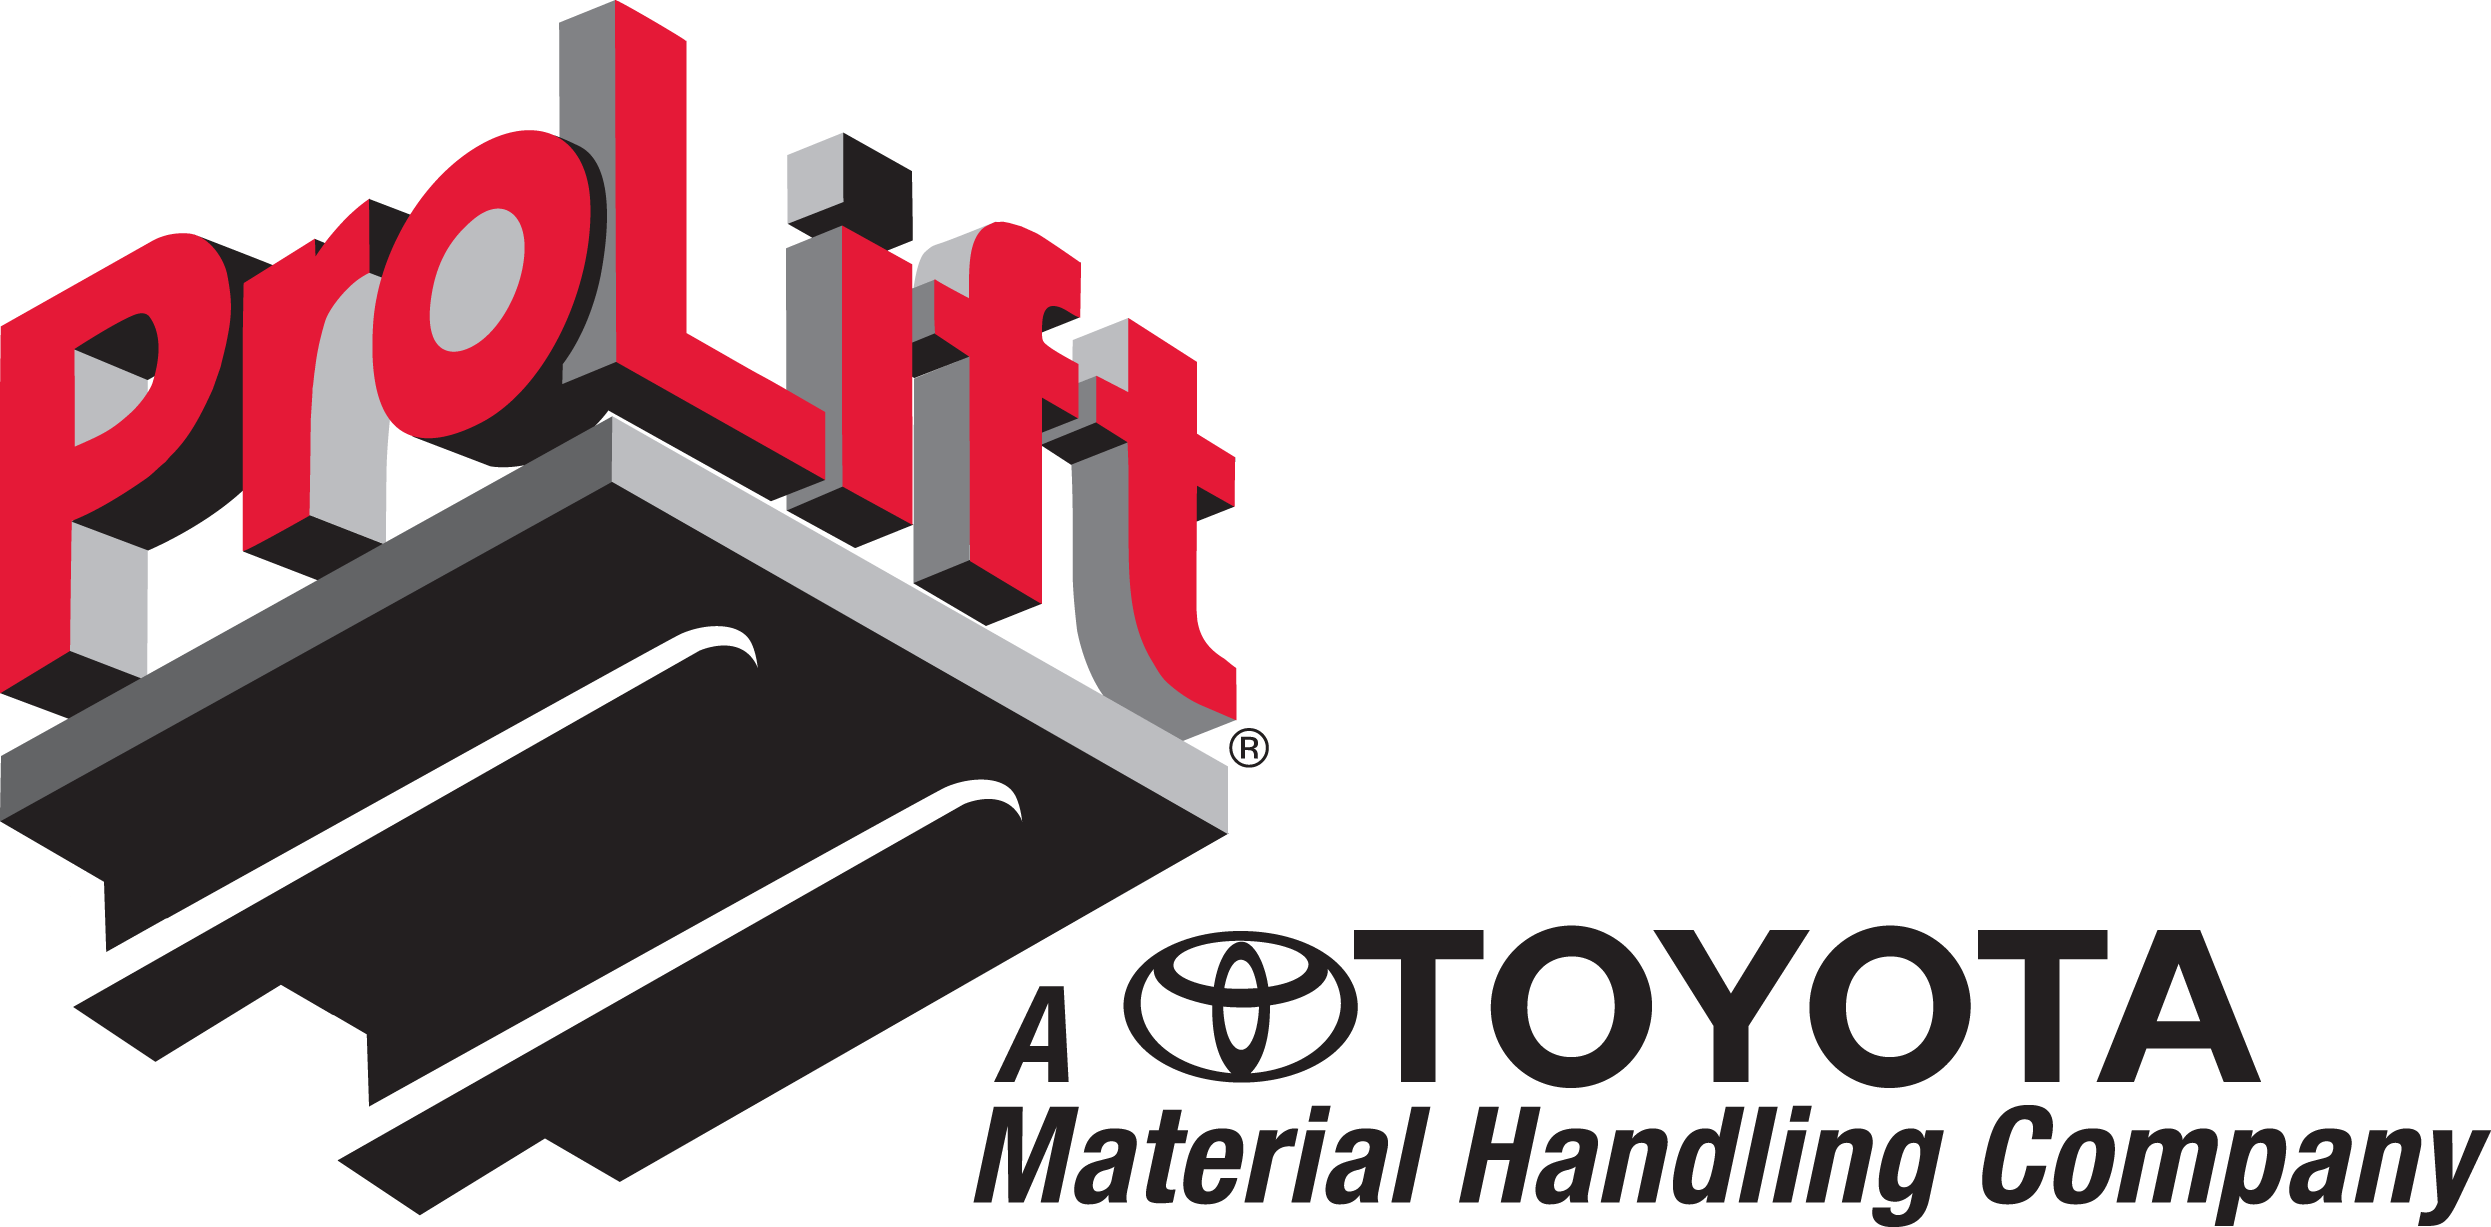 Toyota Forklift Logo - Forklift Dealer. Toyota Forklift Dealer. Material Handling Partner